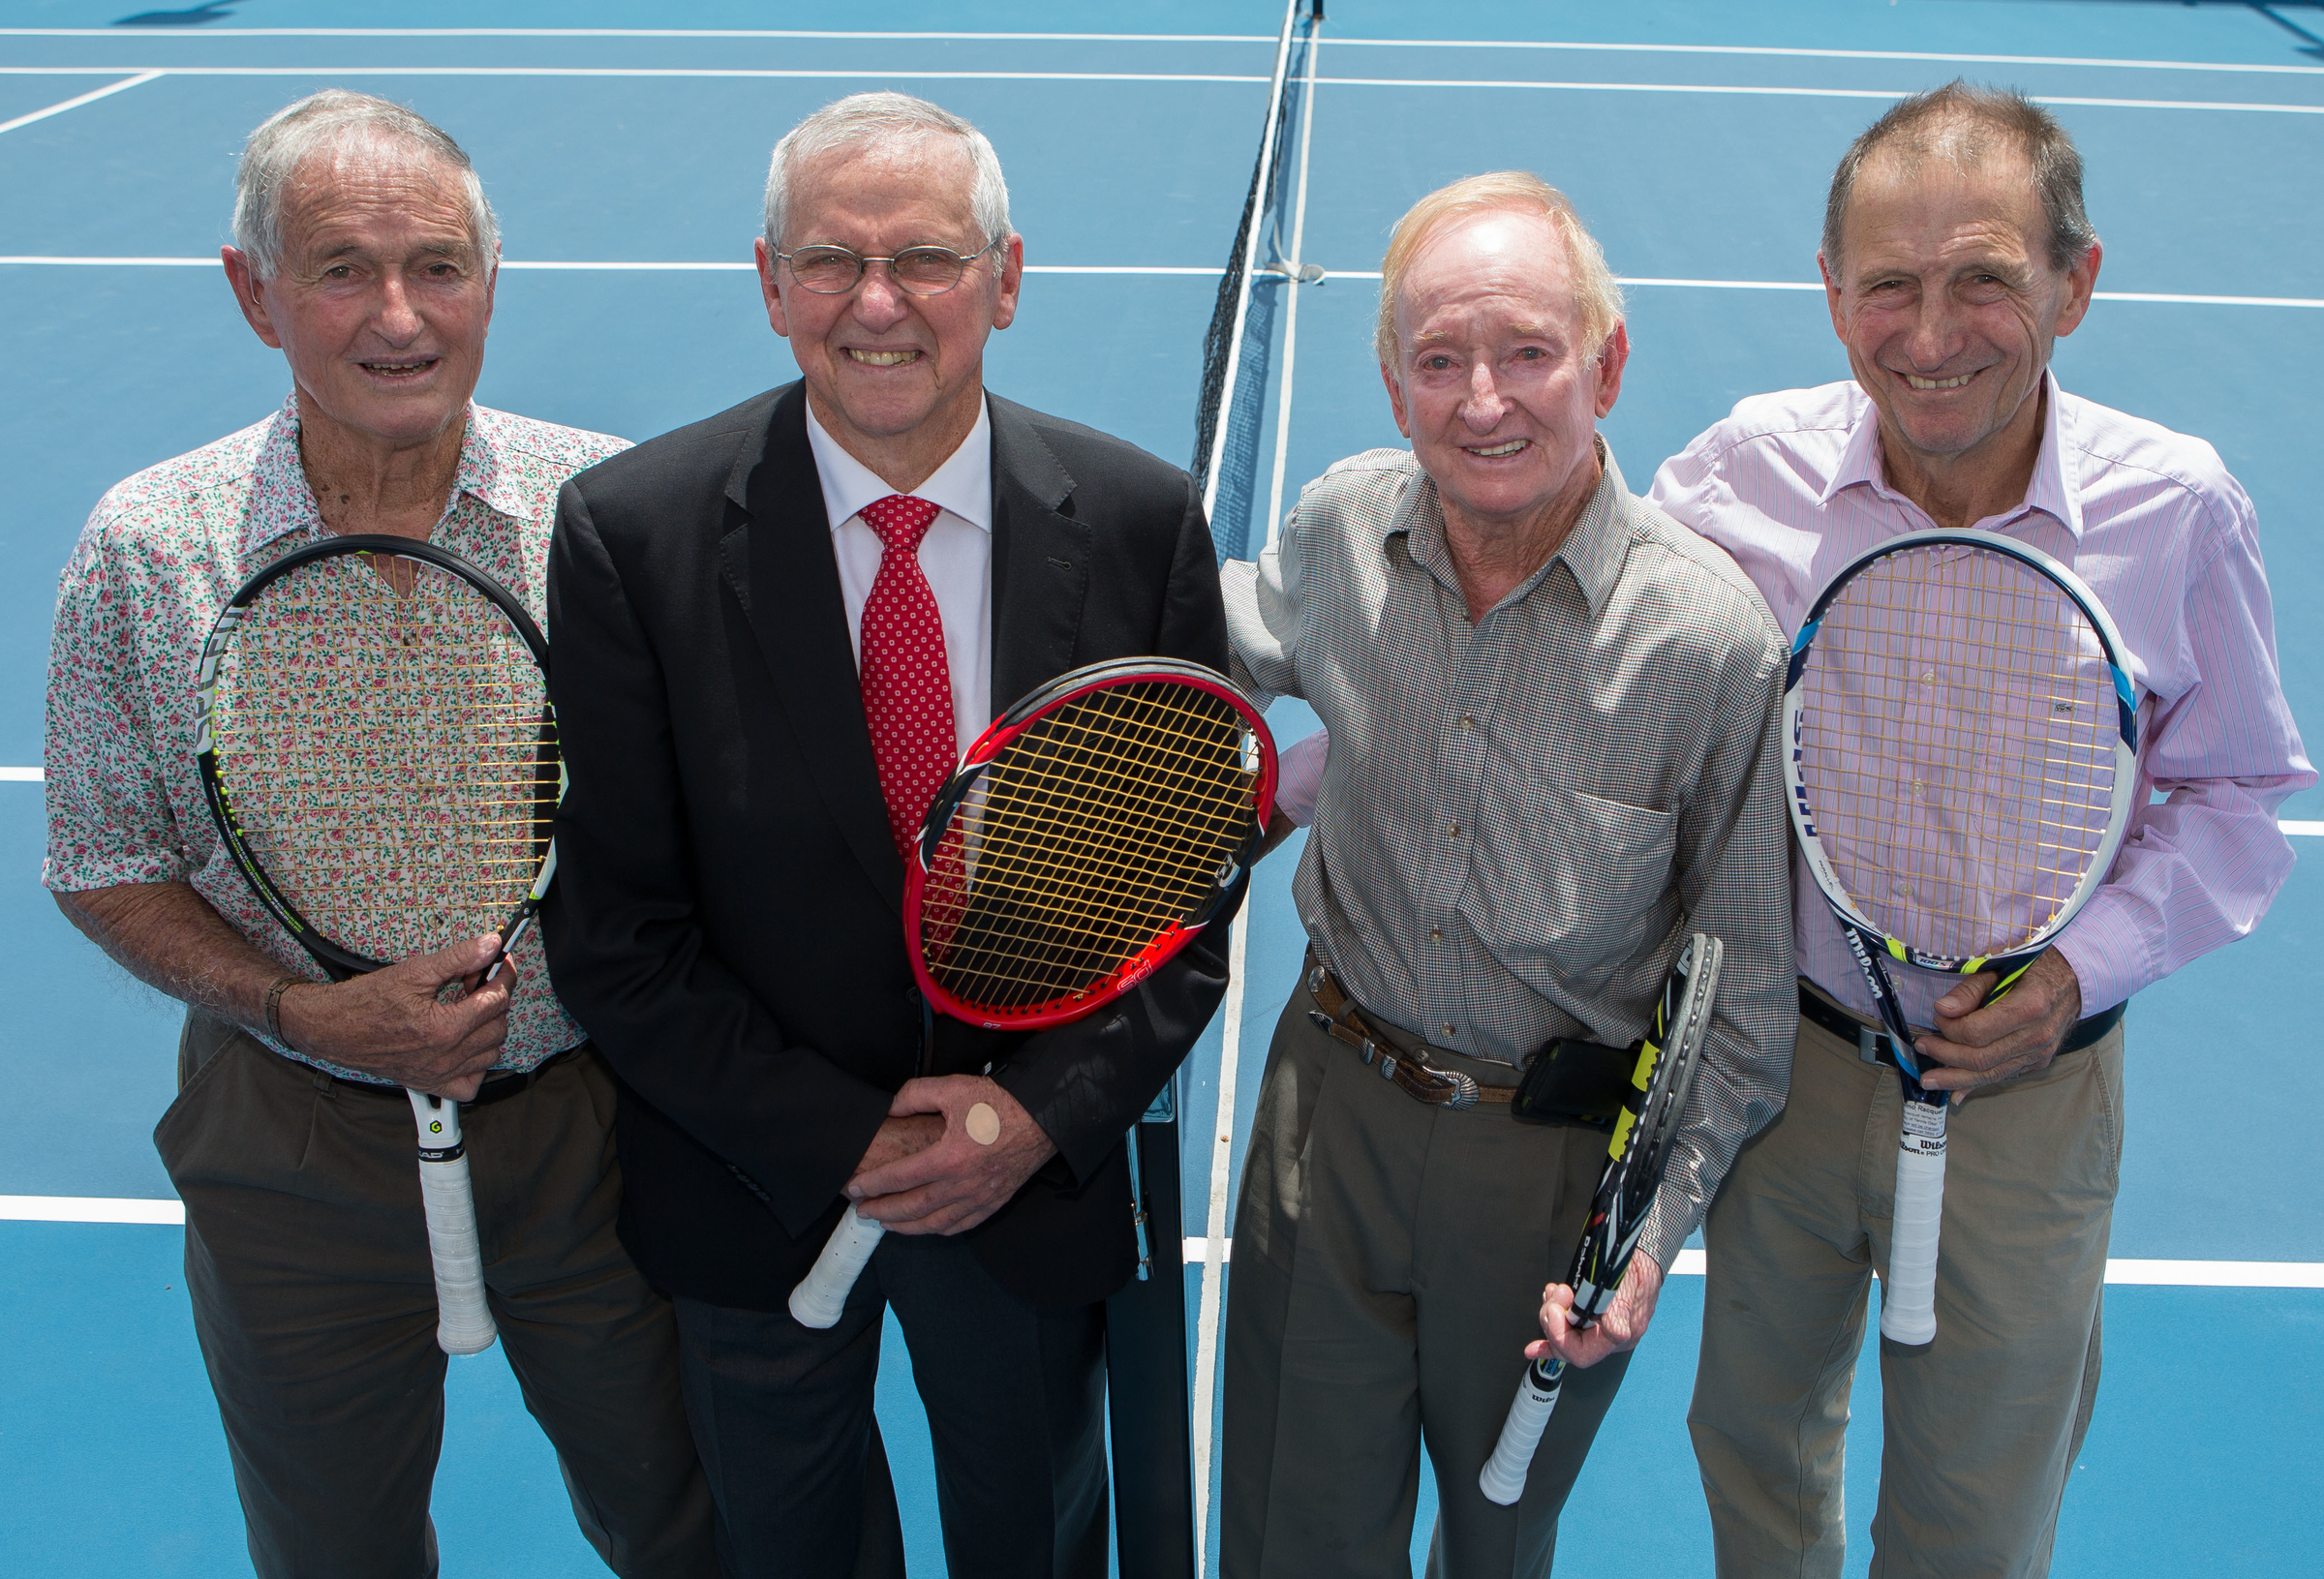 Roy emerson tennis centre